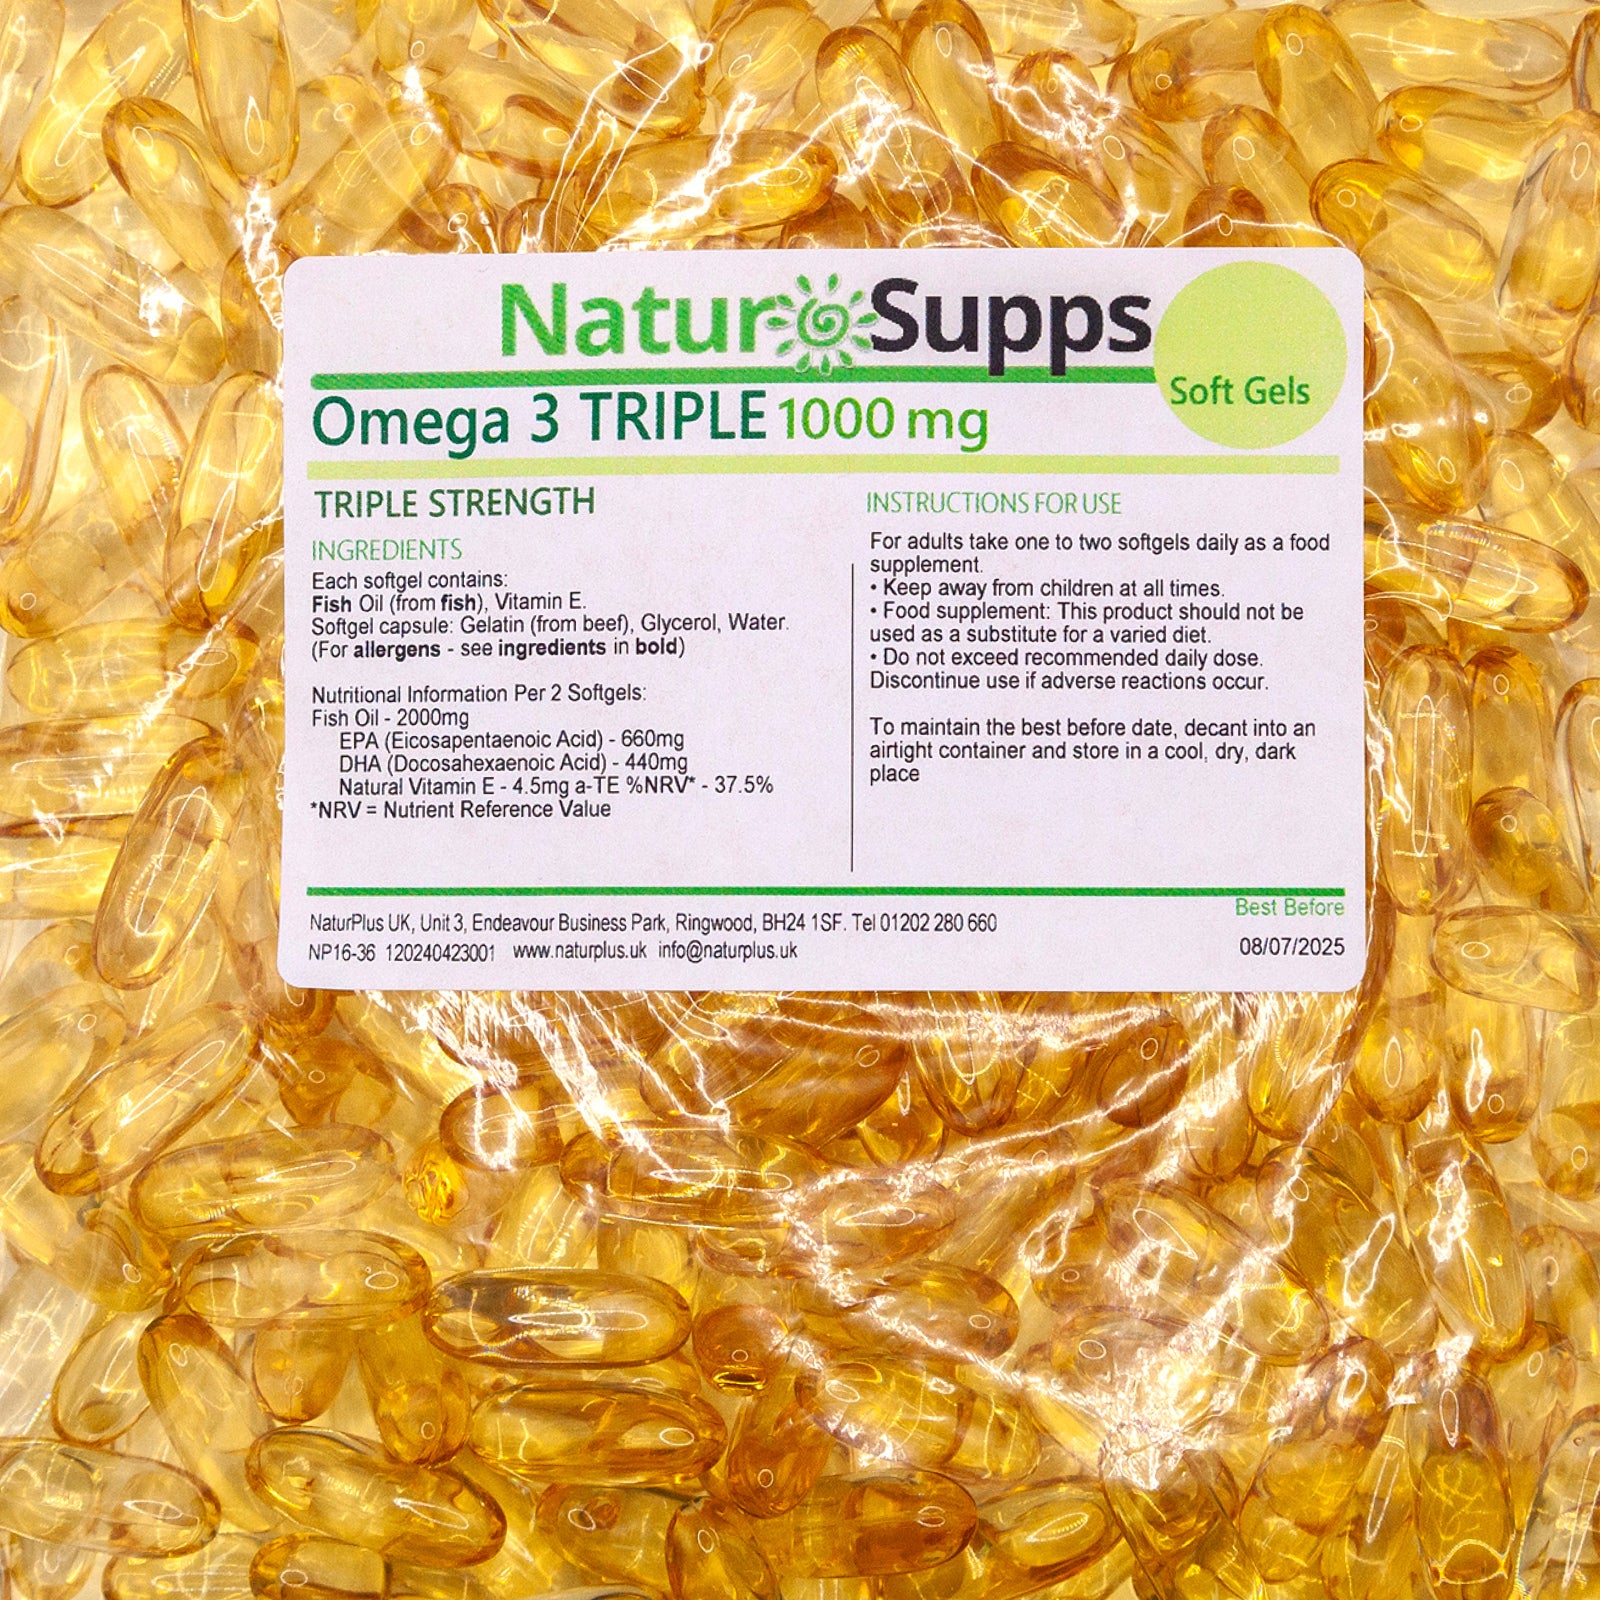 Omega 3 Fish Oil, Triple Strength Omega 3 Fatty Acids 1000mg Capsules, High DHA & EPA